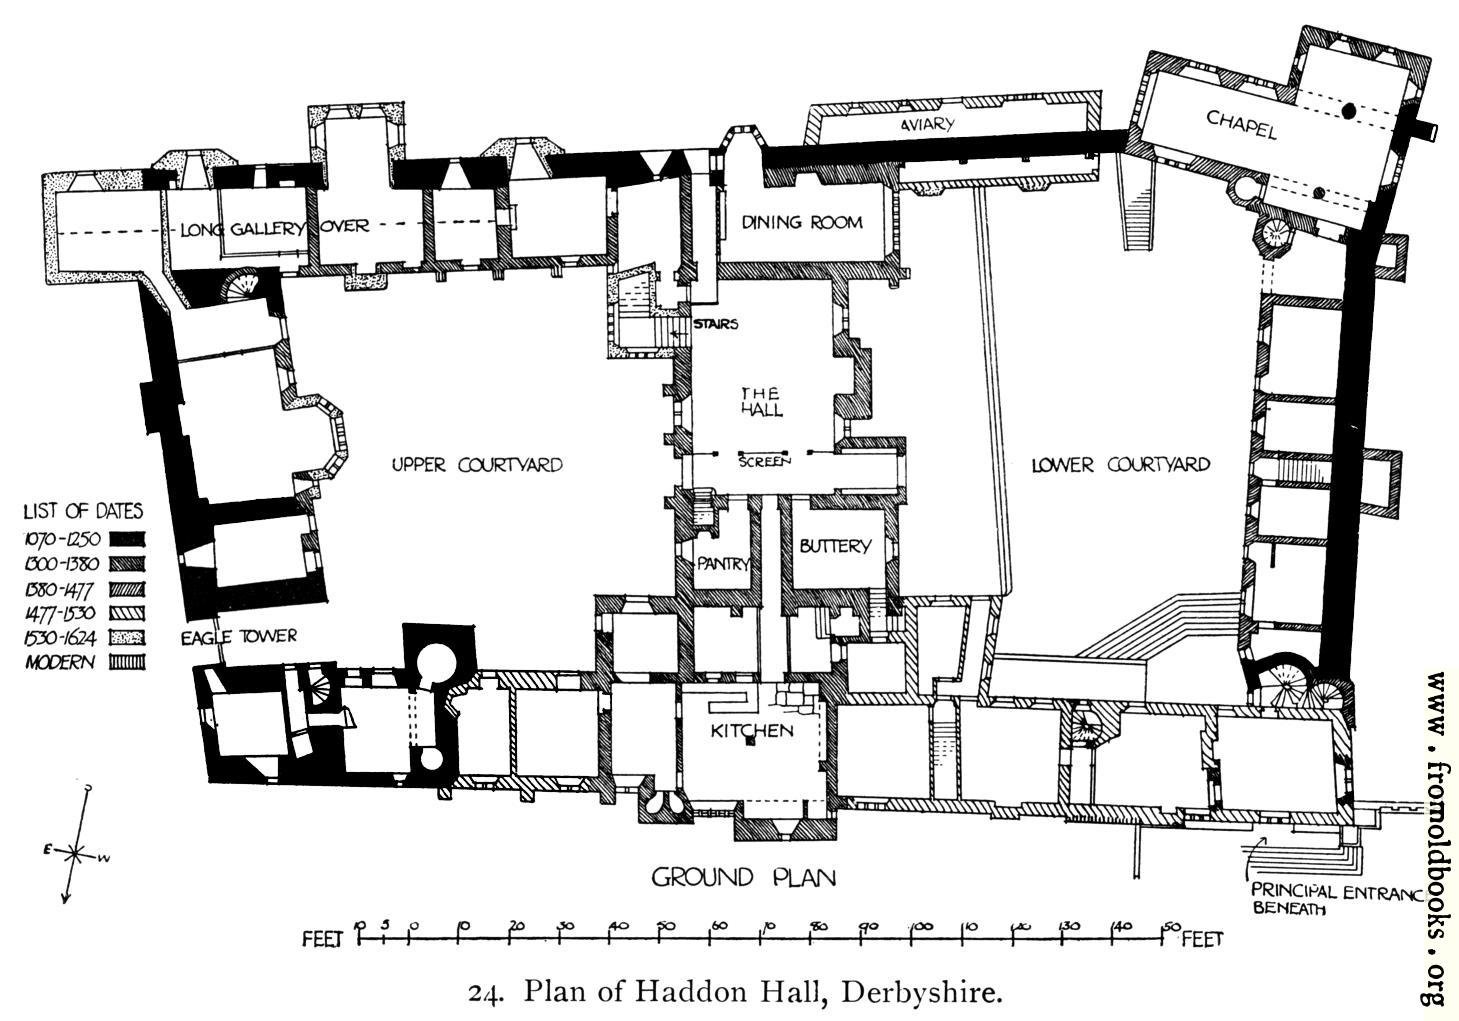 24. Plan of Haddon Hall, Derbyshire